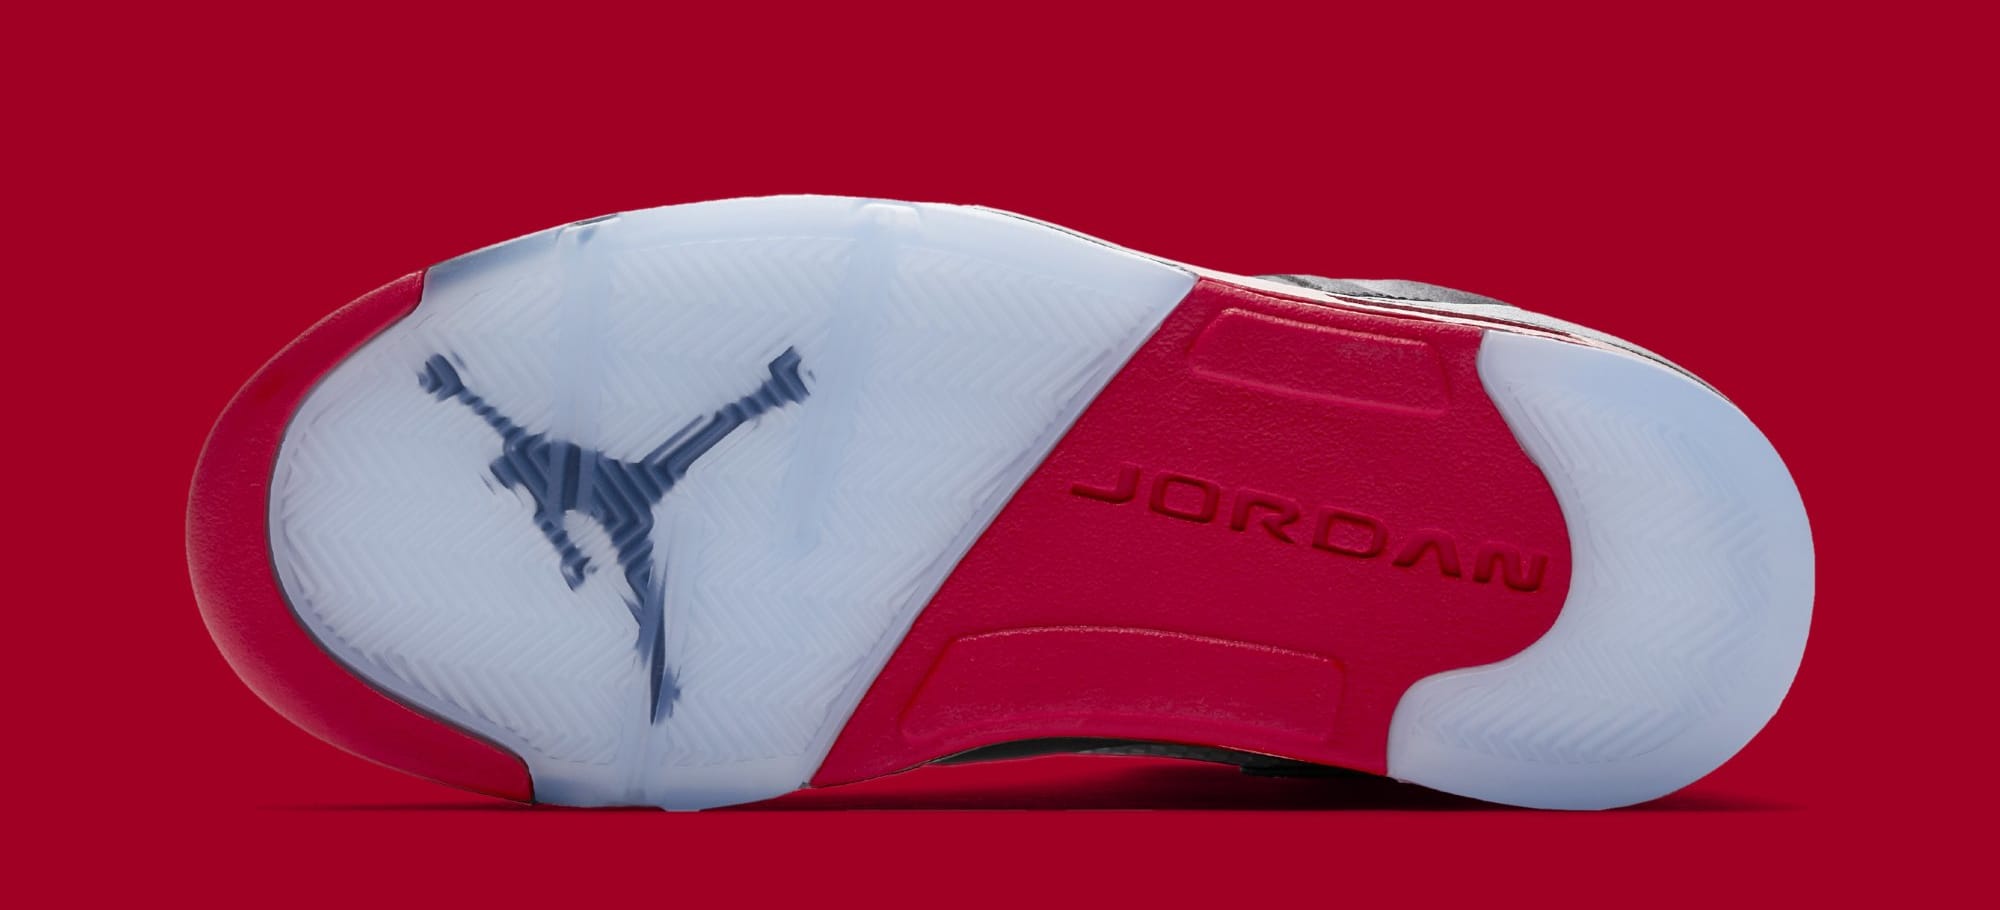 Air Jordan 5 Retro &#x27;Black/University Red&#x27; 136027-006 (Sole)